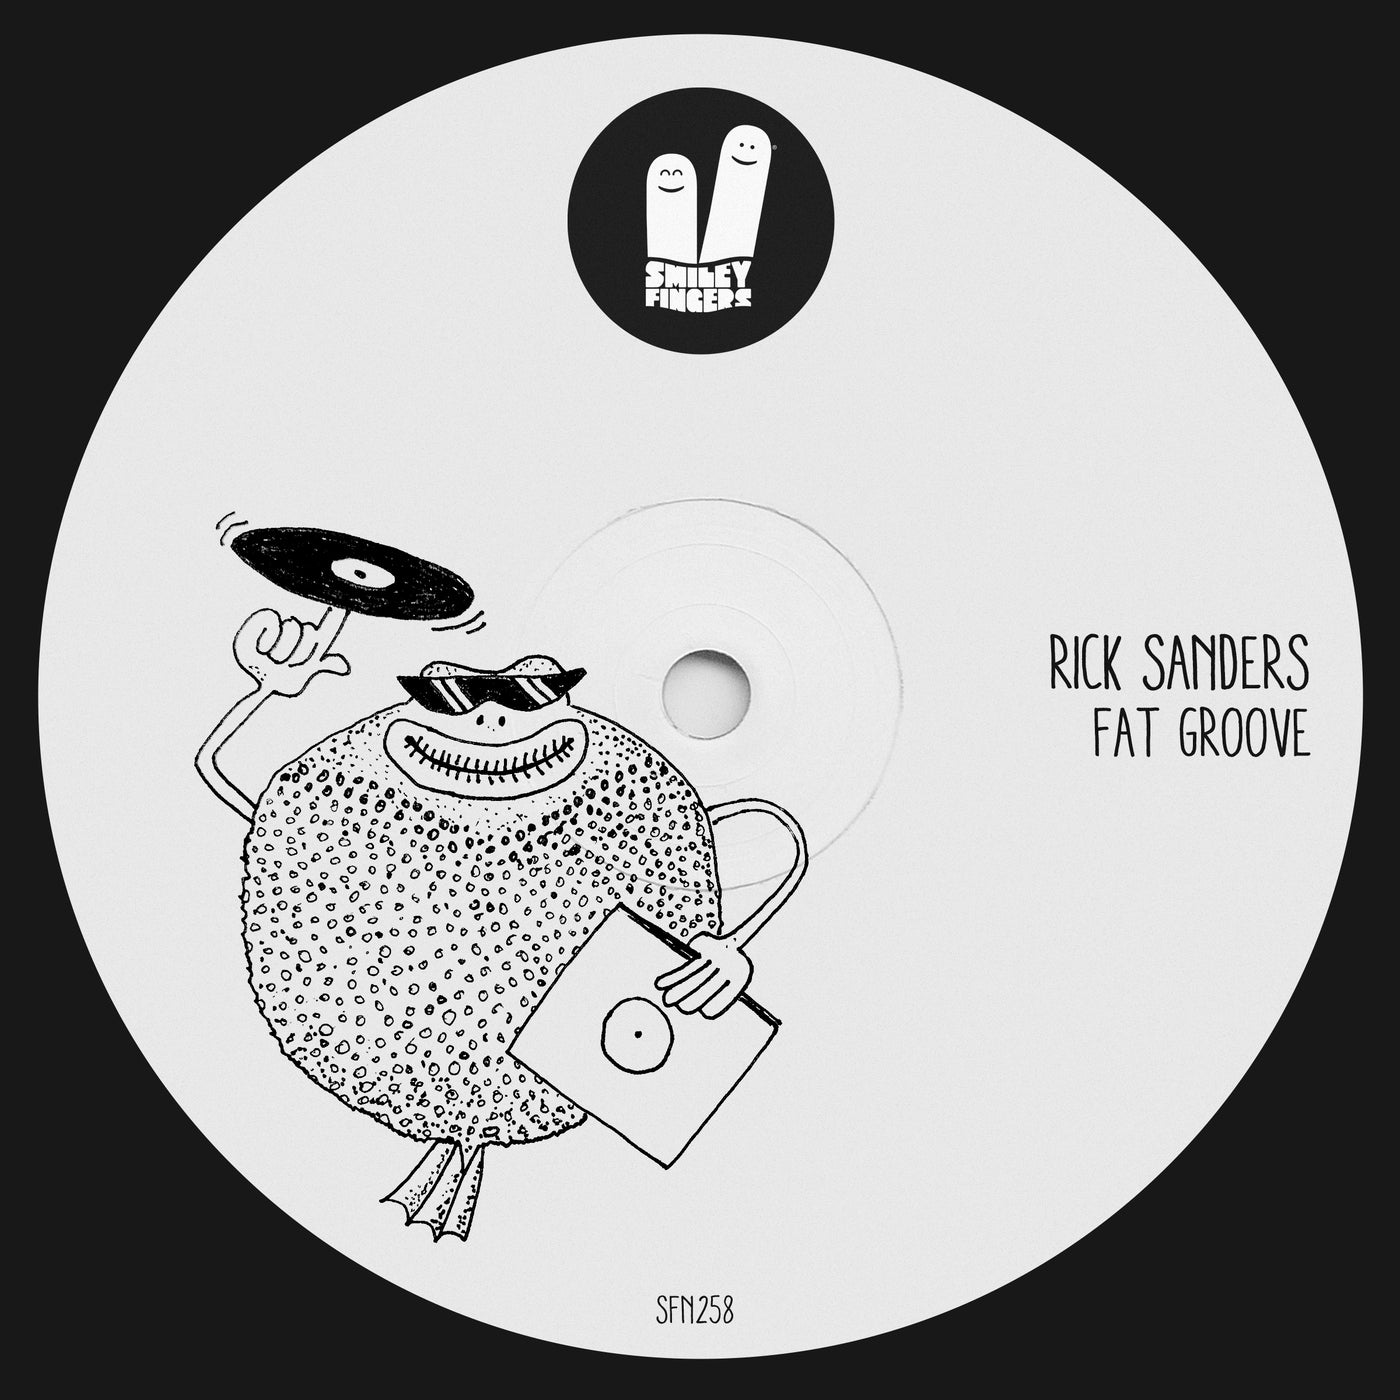 Rick Sanders - Fat Groove (Smiley Fingers)